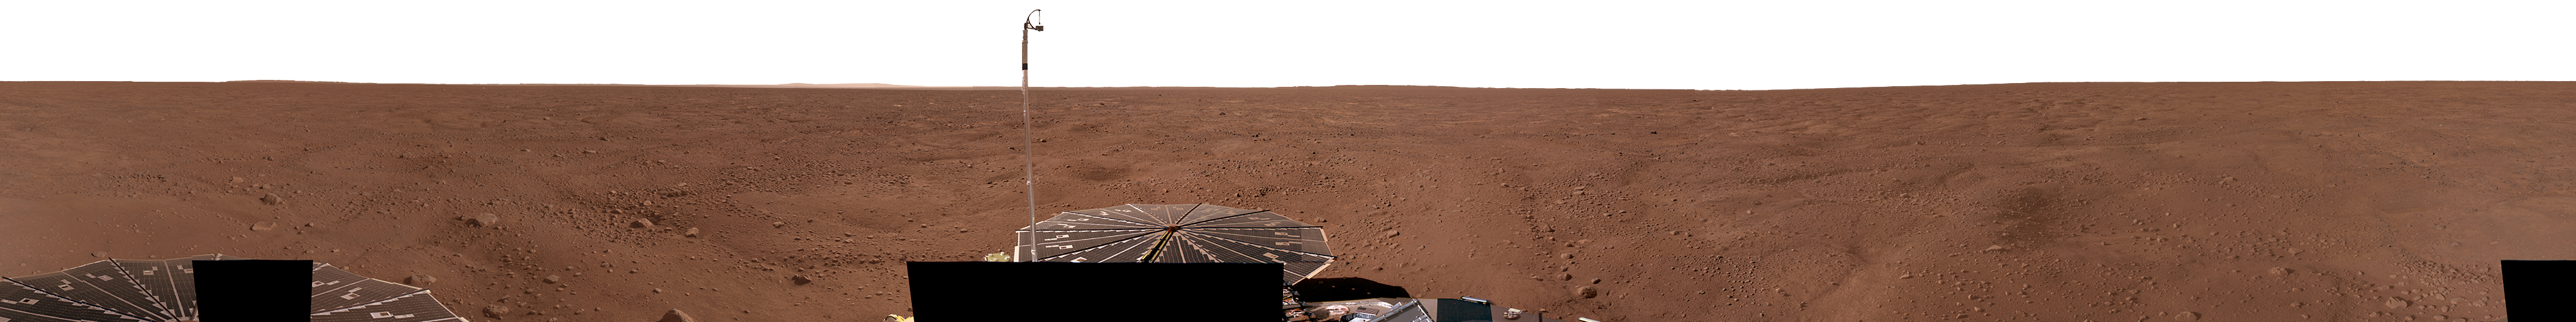 Mars Phoenix landing site